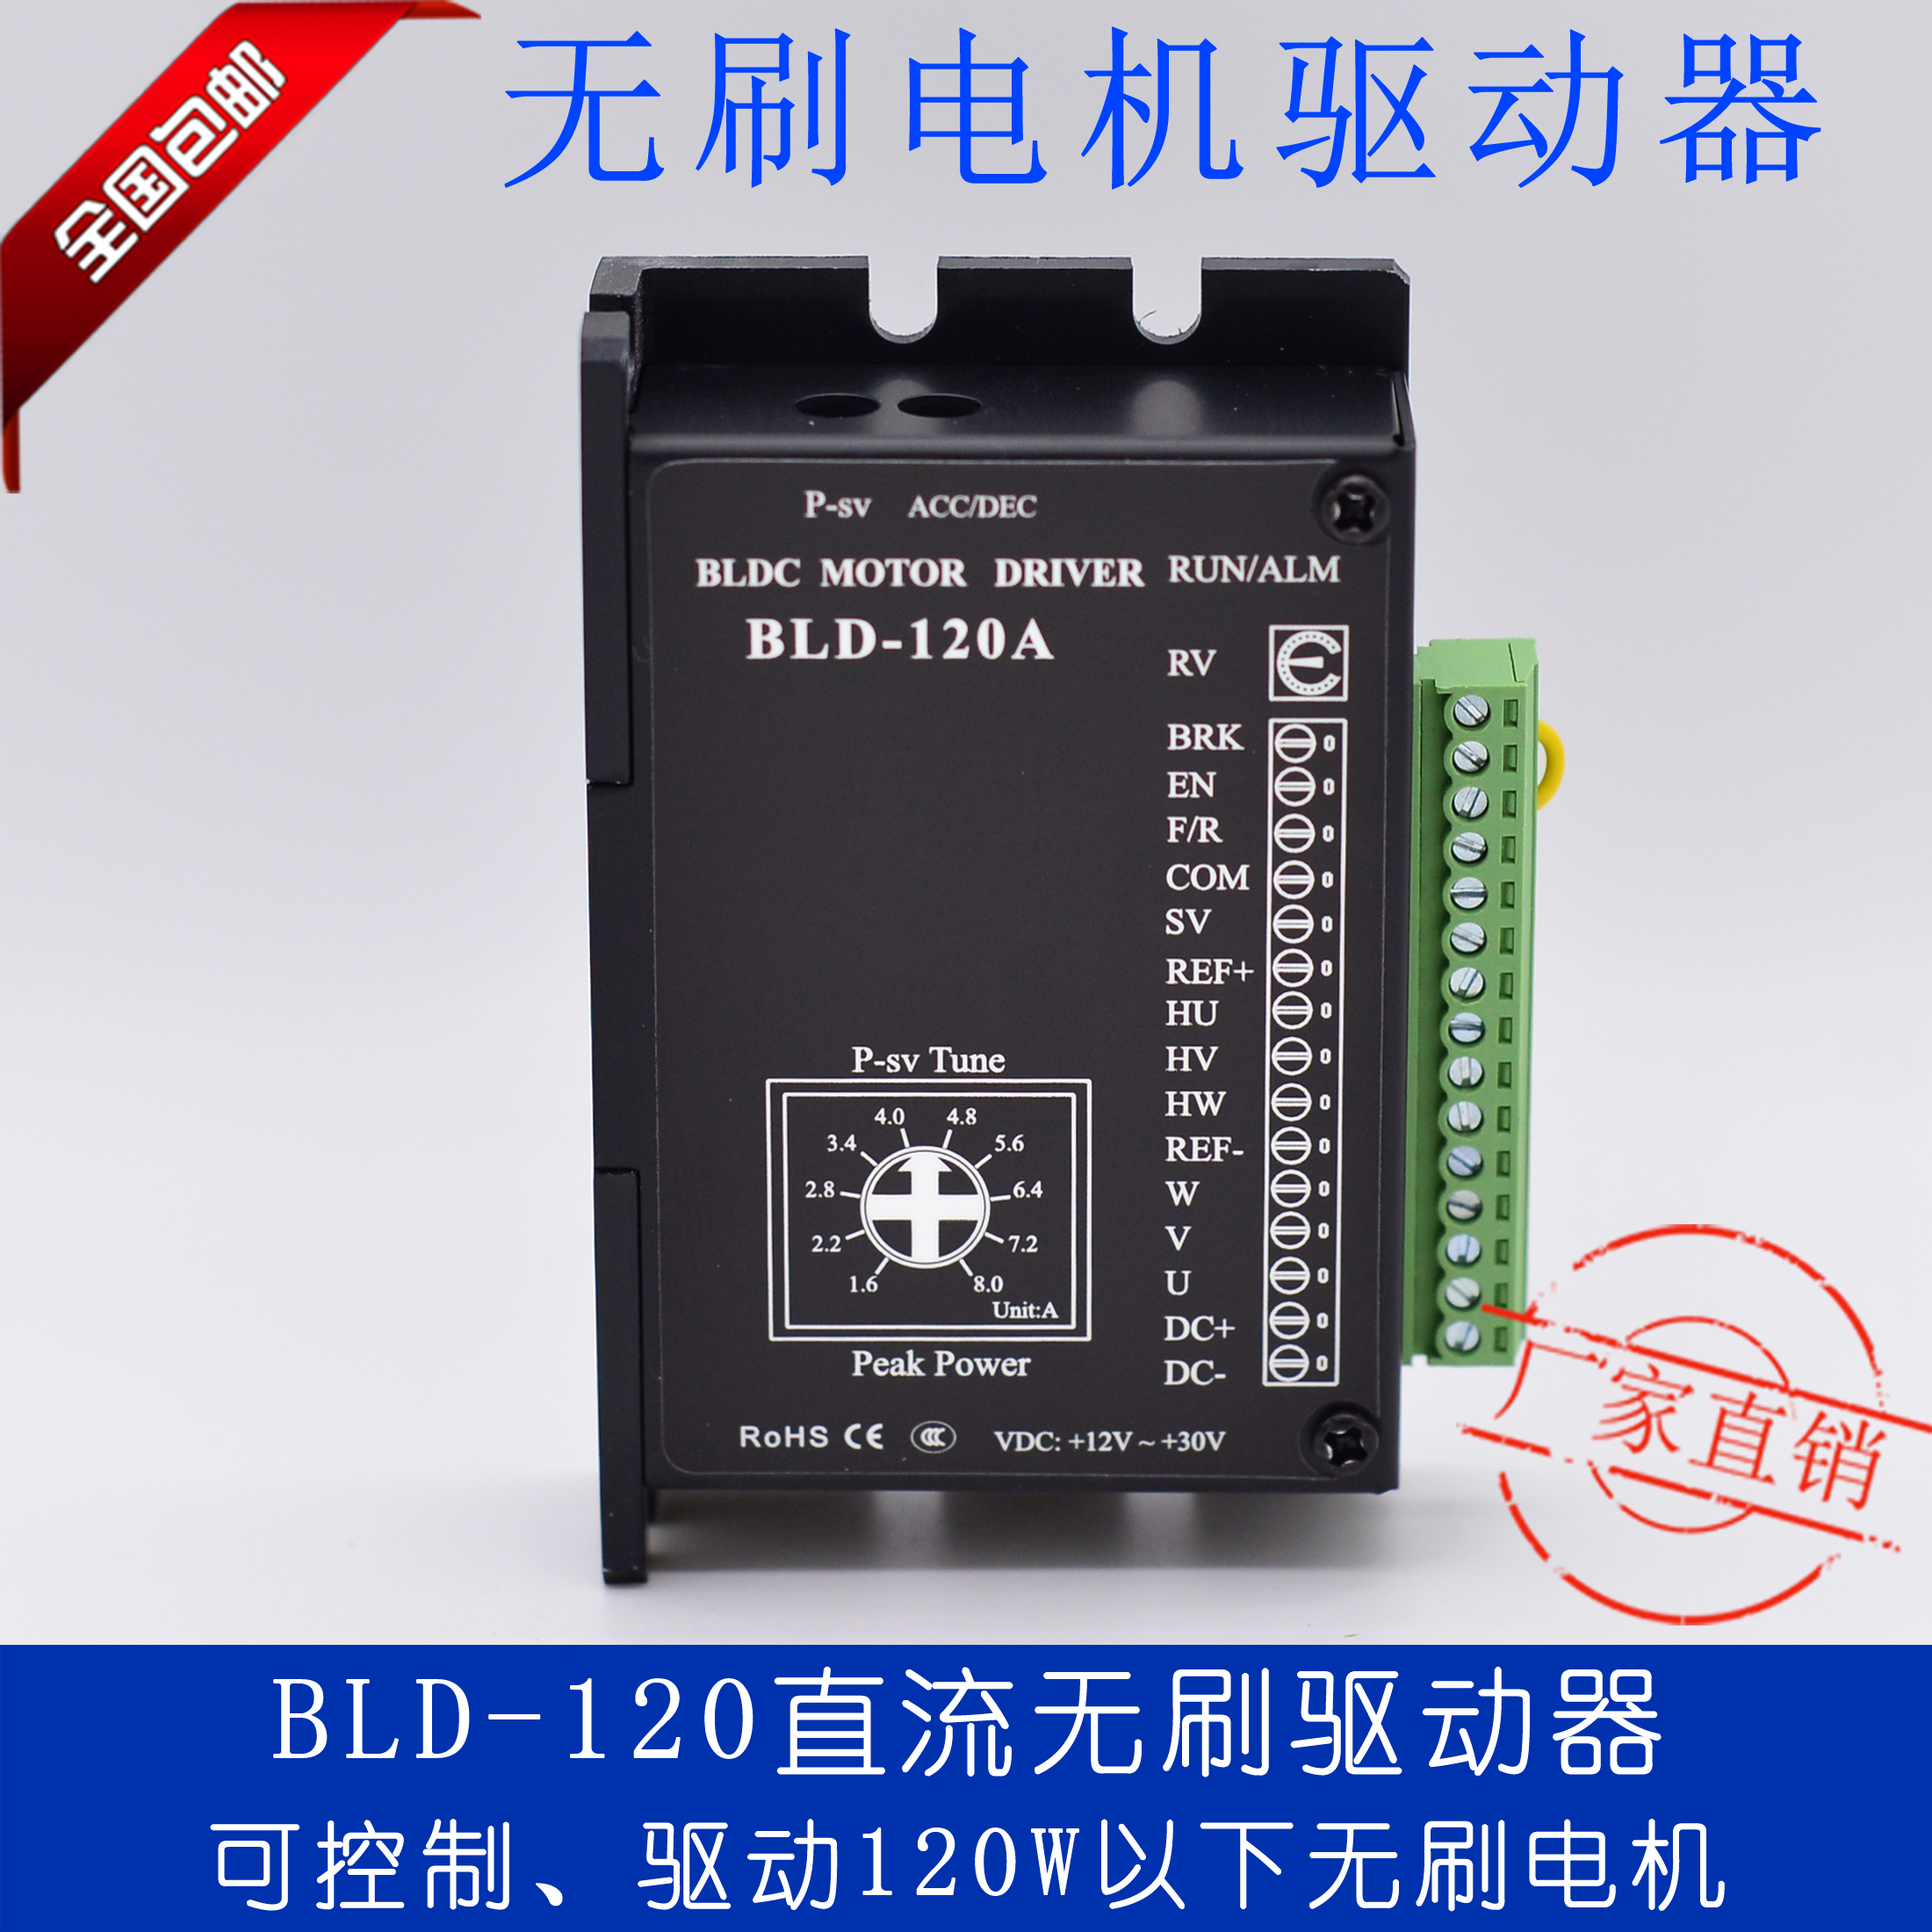 BLD-120A通用款三相直流无刷驱动器 可驱动120W以下无刷霍尔电机